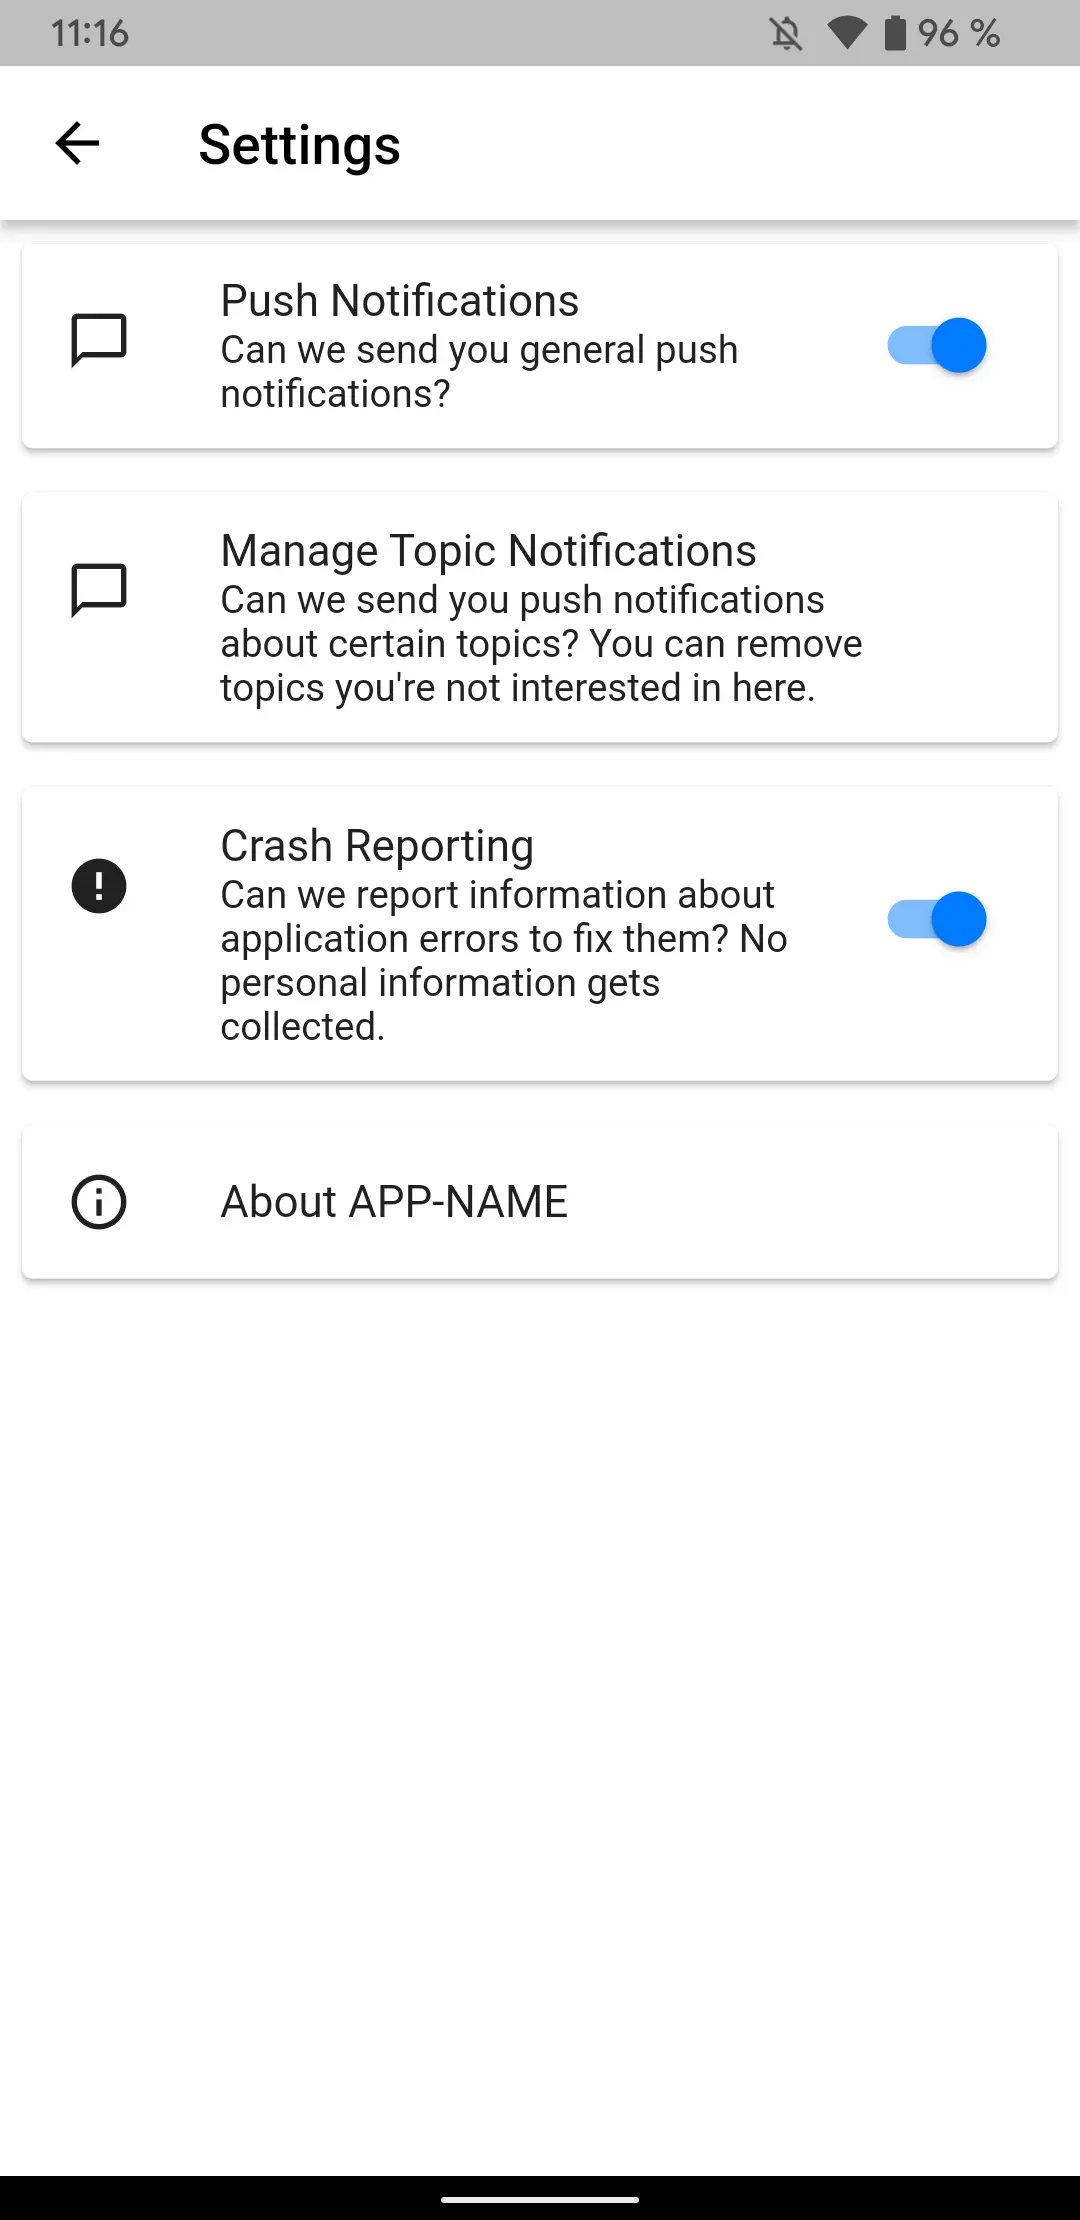 A screenshot of the app's settings menu.